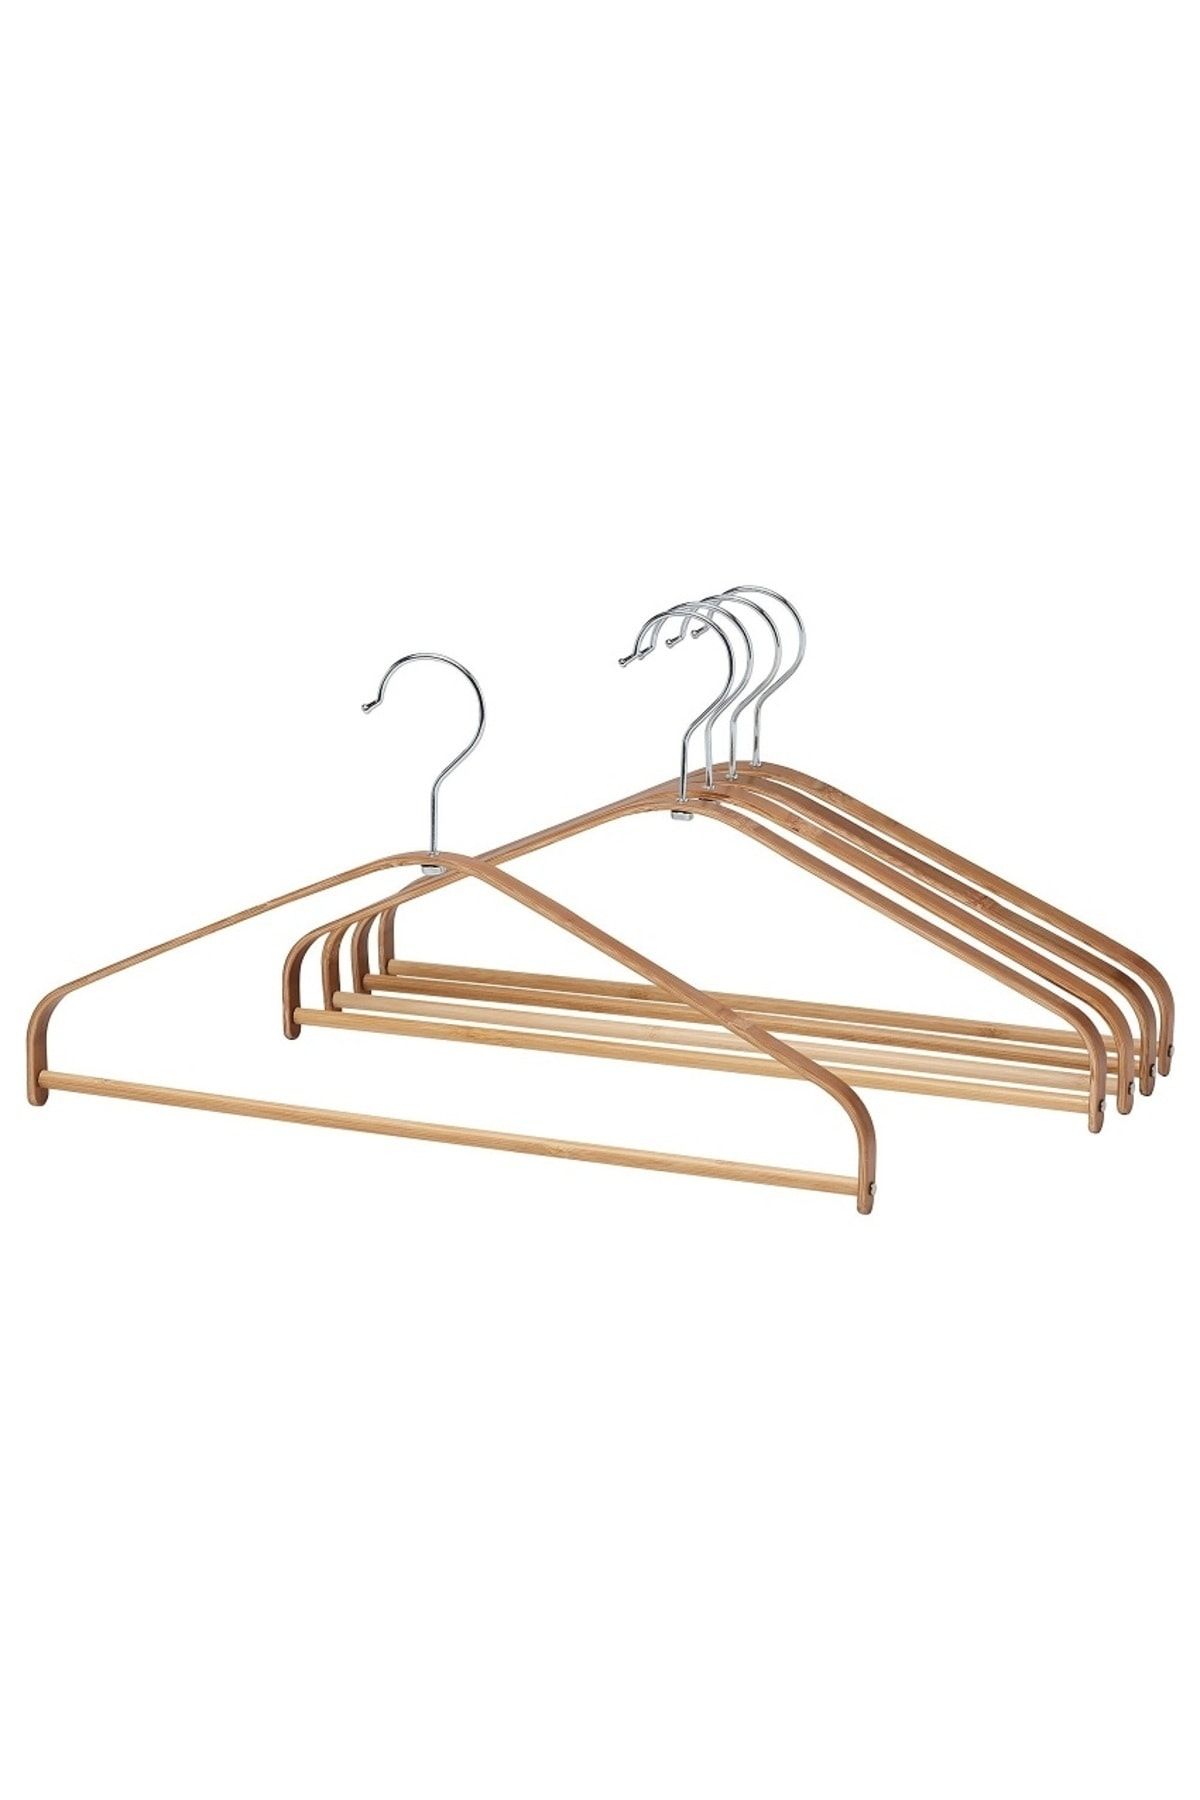 IKEA - TRENDSEPET Hösvans Bambu Elbise Askısı 5 Adet, Askı, Düzenleme, Bambu